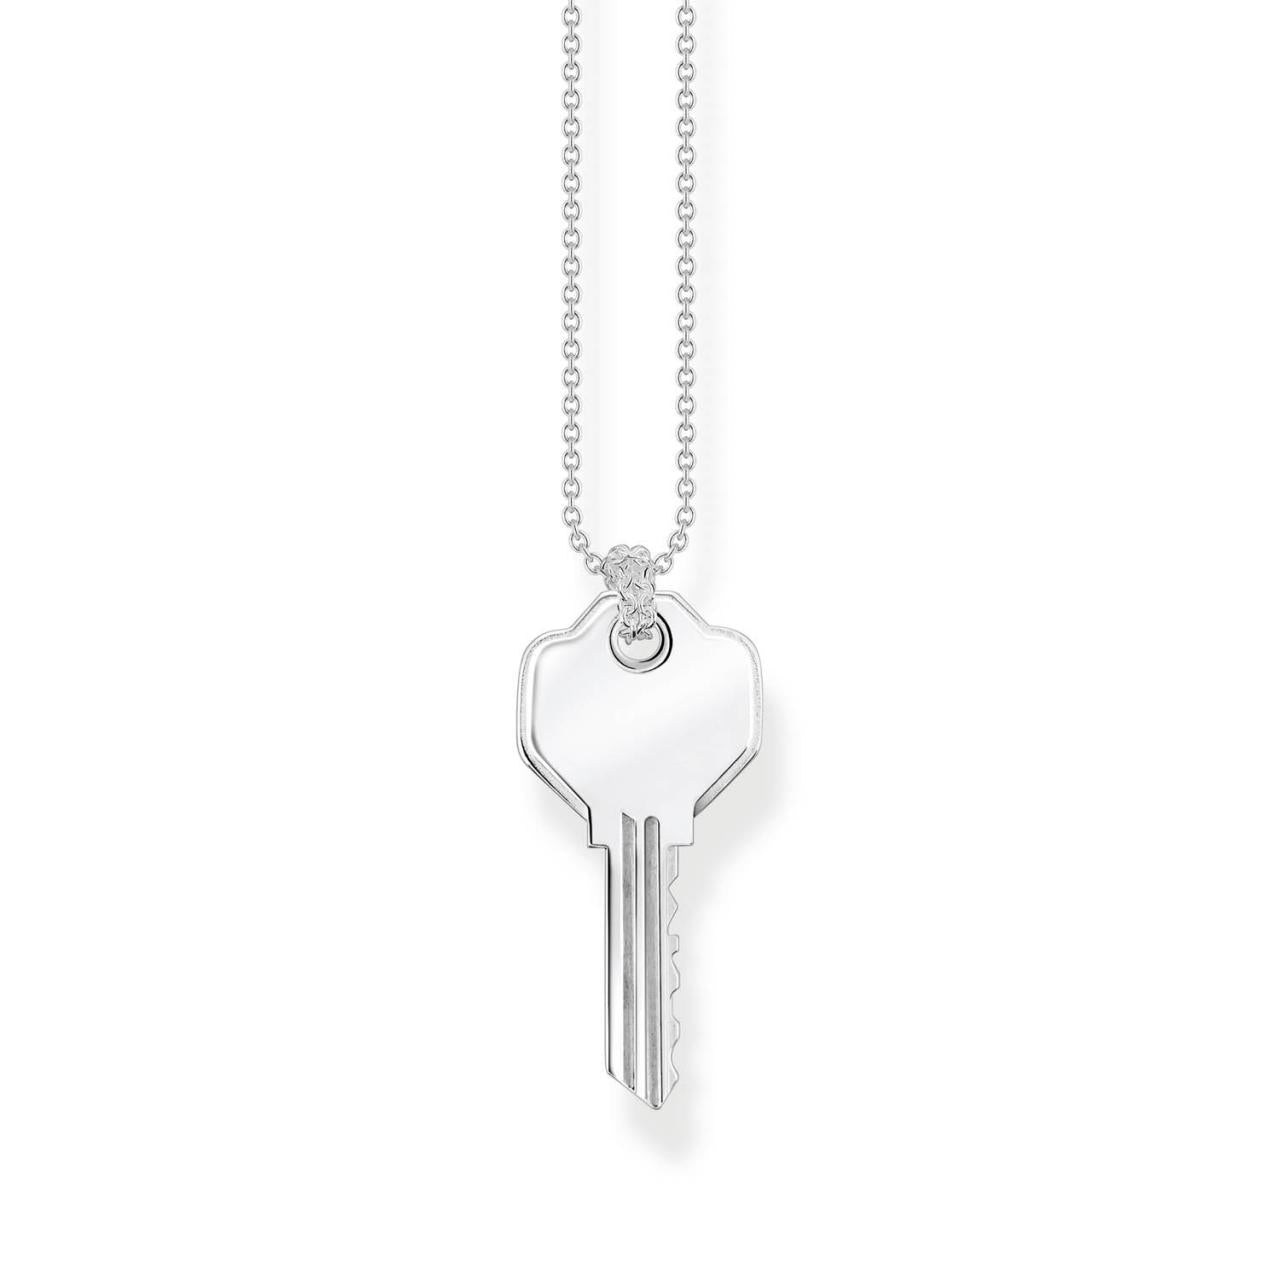 Engravable silver key